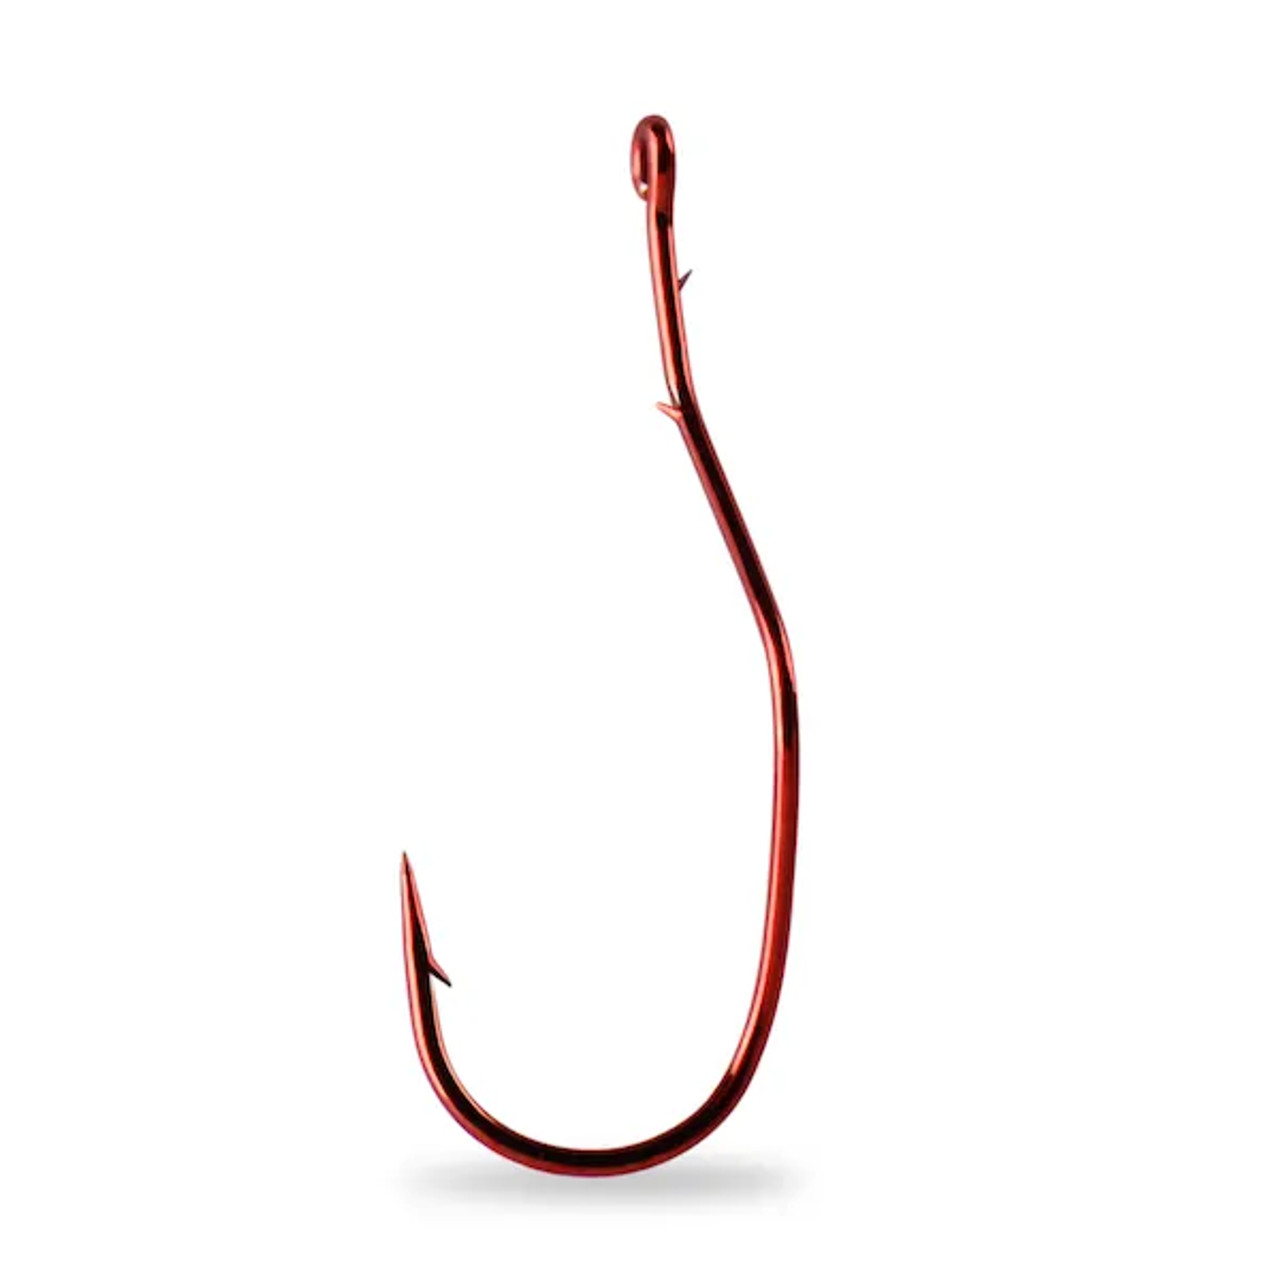 Mustad treble hook size 10 red